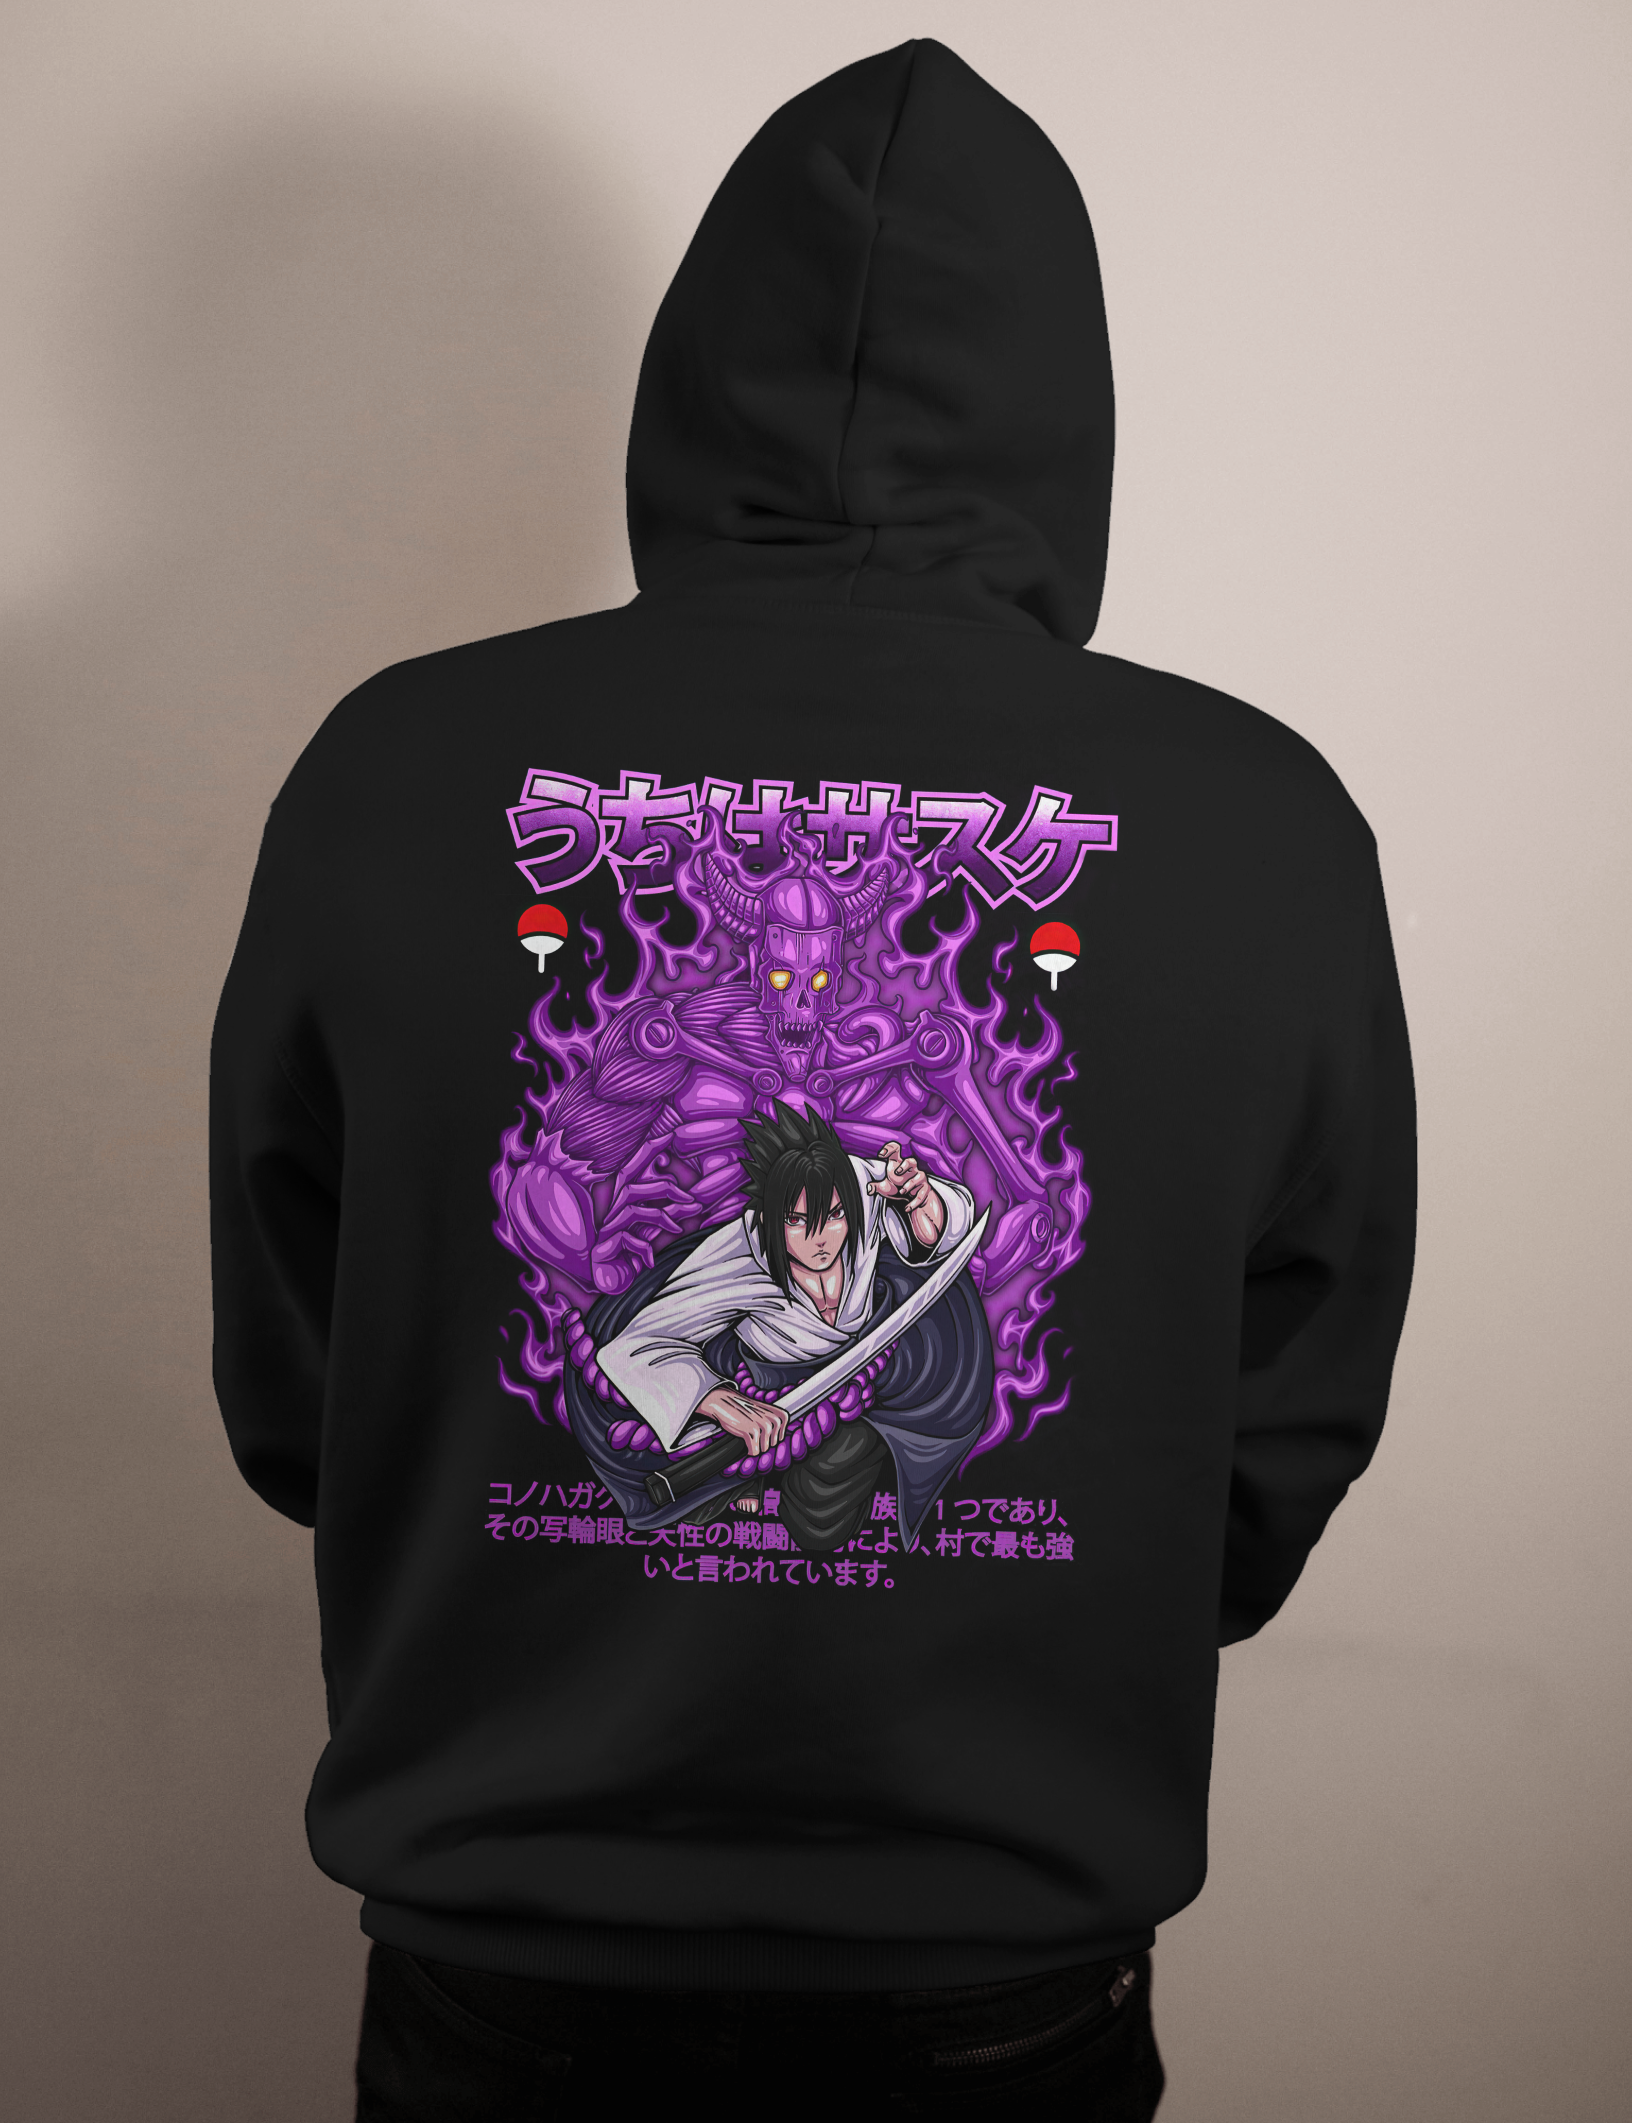 shop and buy naruto sasuke uchiha anime clothing hoodie